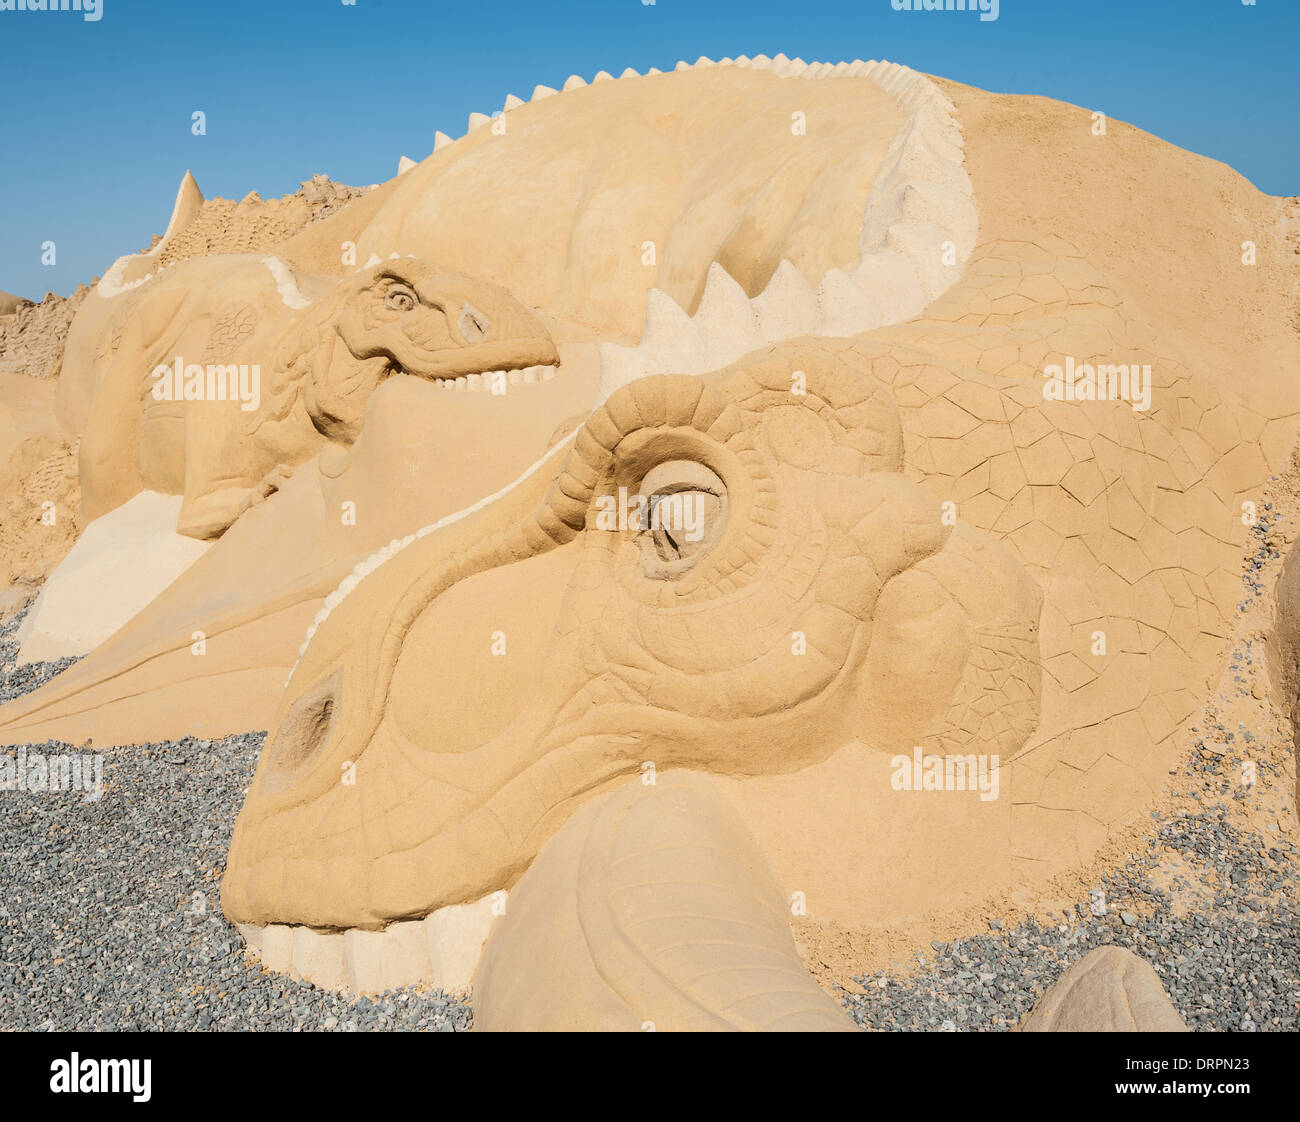 Closeup detail of large sand sculpture statue of a dinosaur at sand city theme park Stock Photo